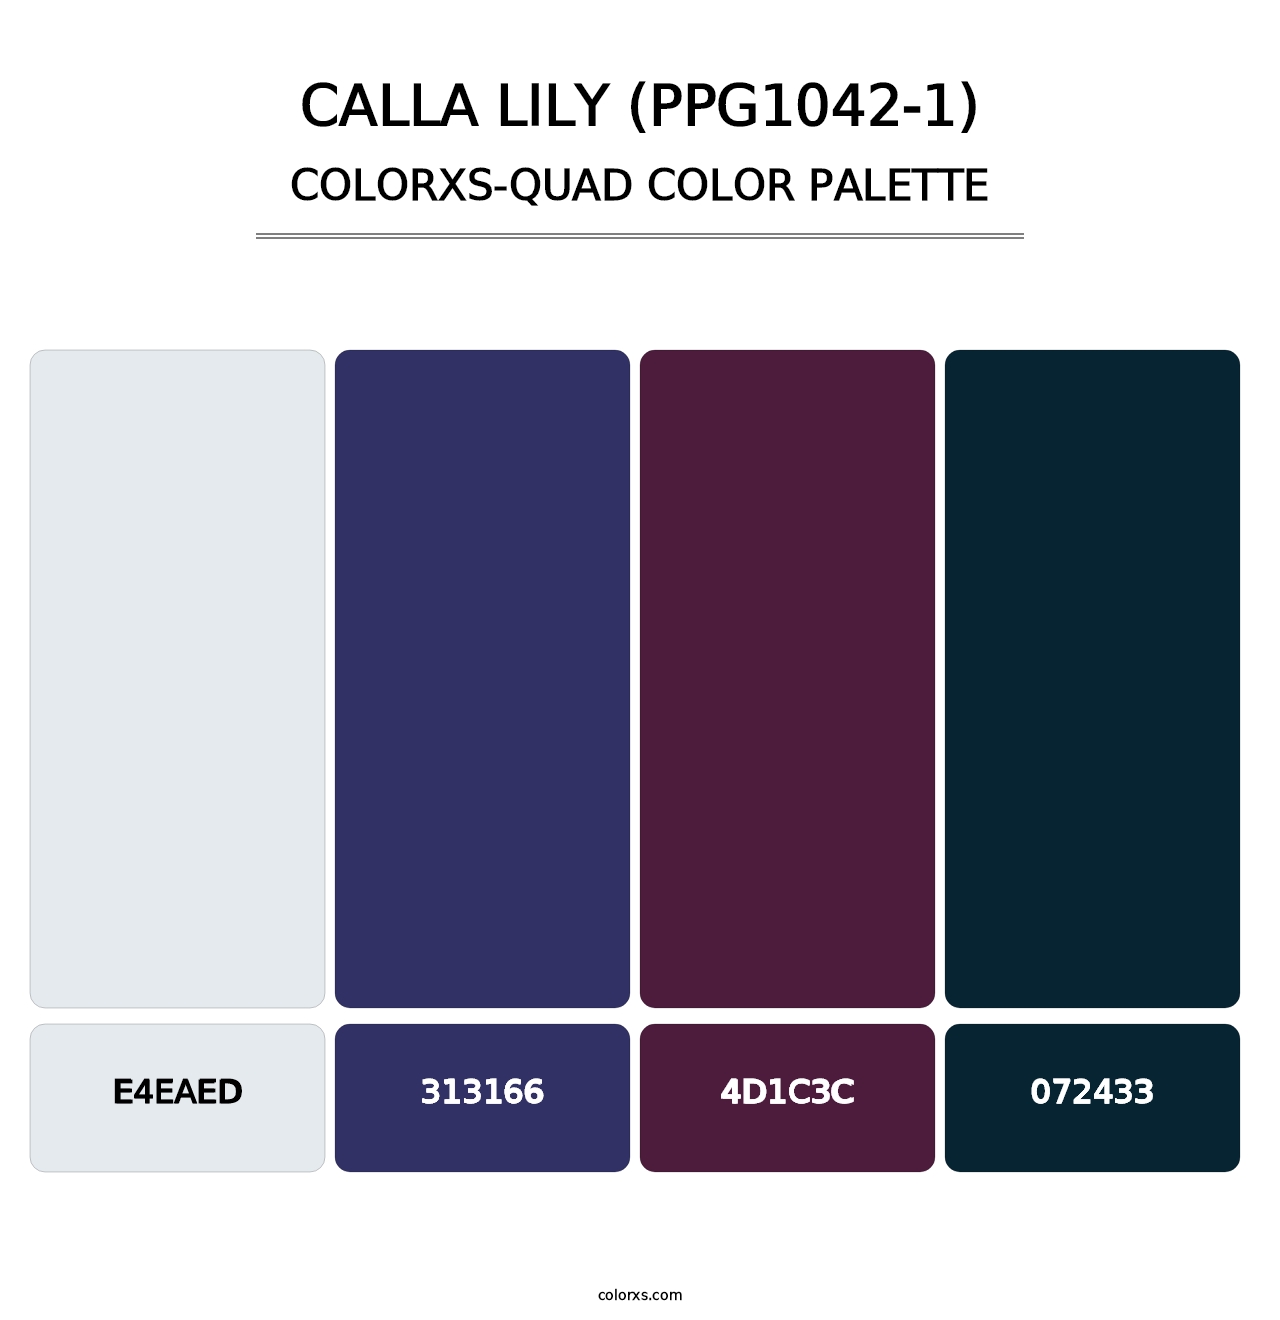 Calla Lily (PPG1042-1) - Colorxs Quad Palette